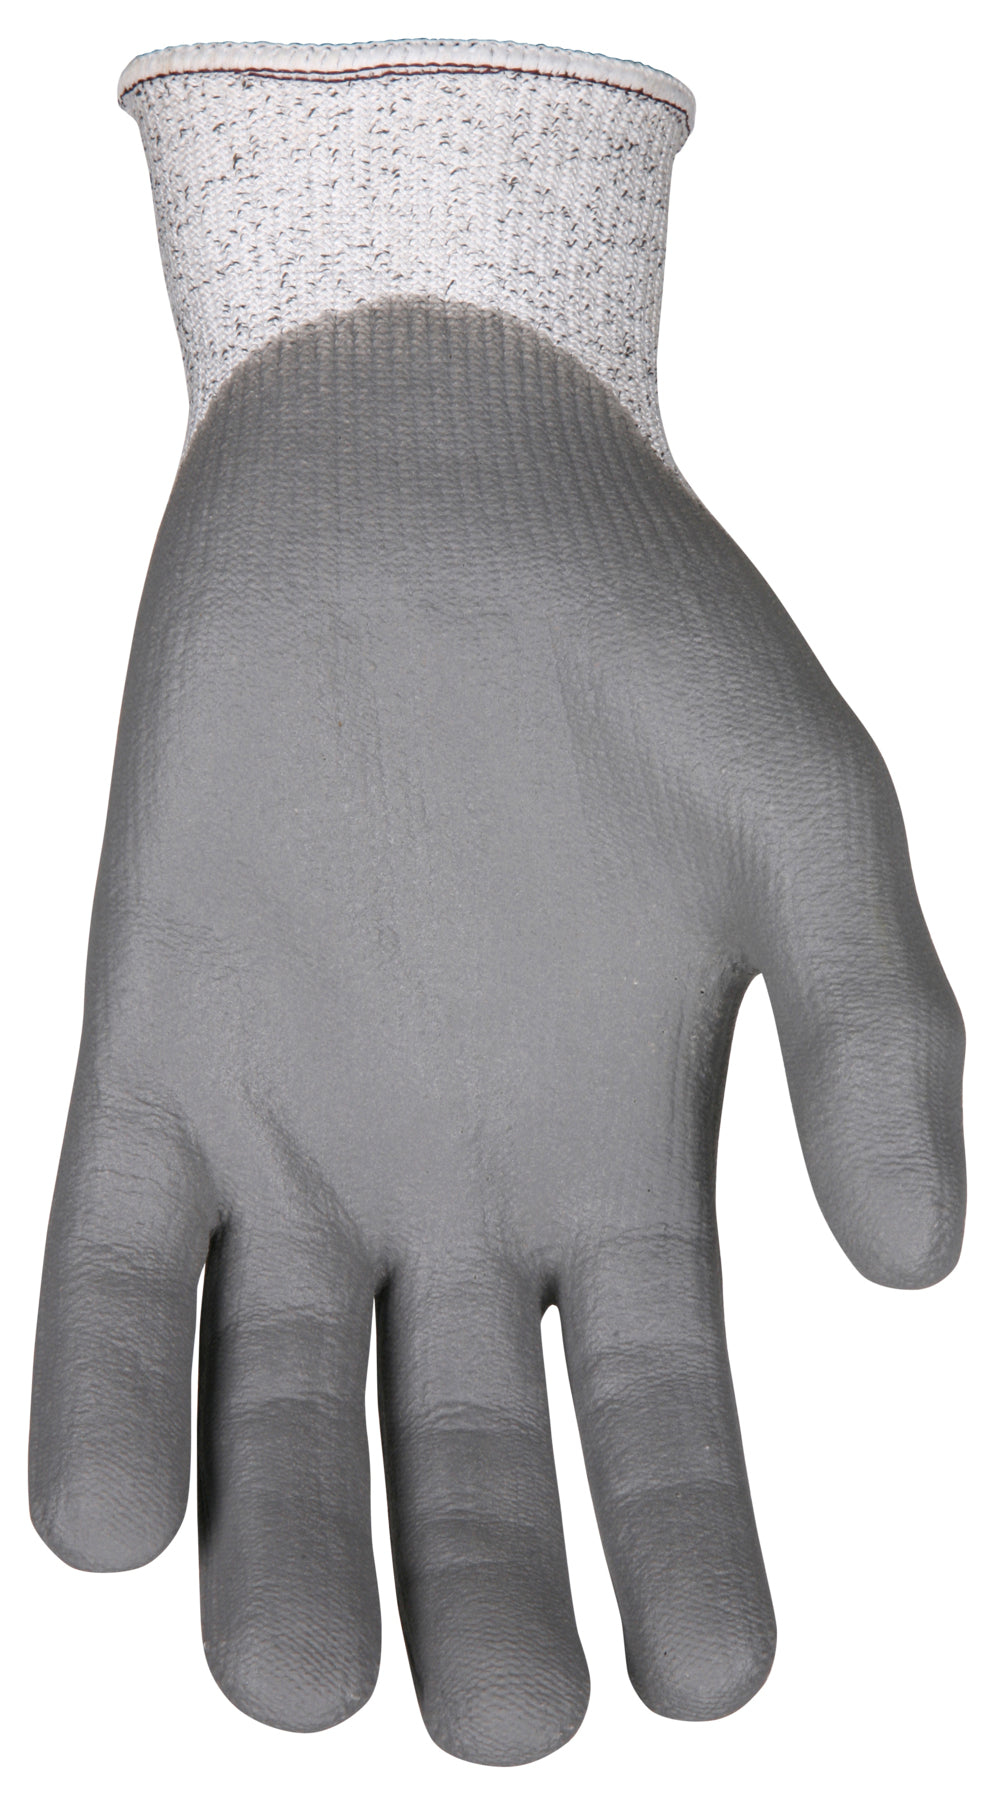 96720NF - Cut Pro® Dyneema® Work Gloves